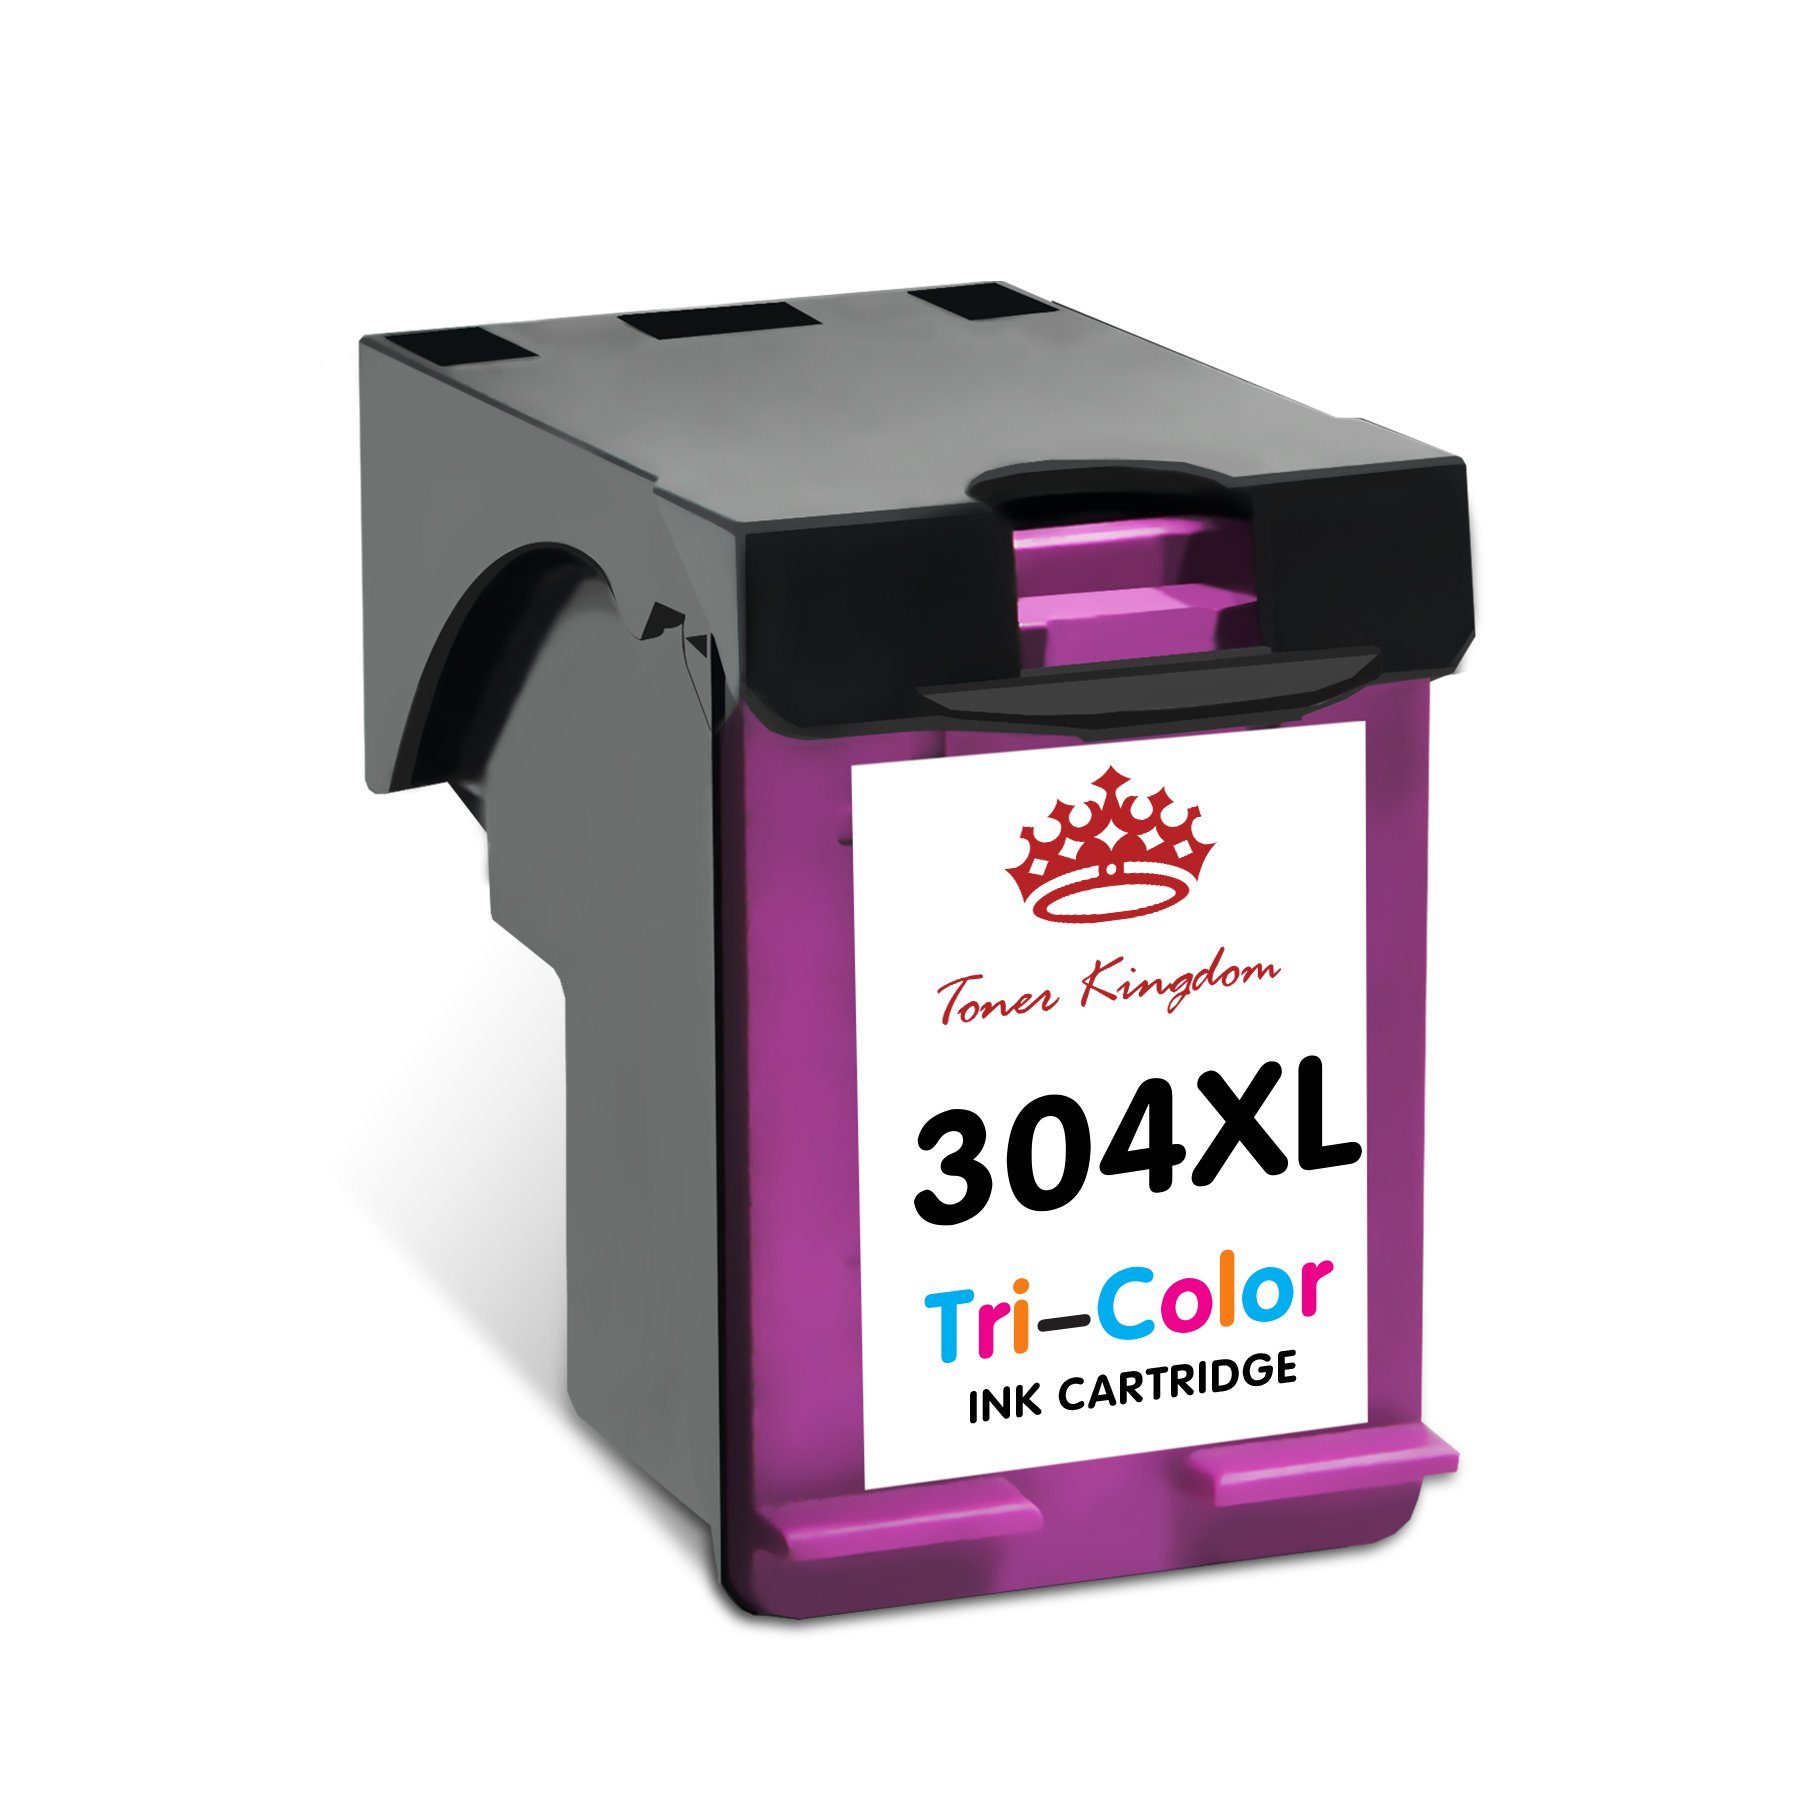 Verschieden Toner Kingdom 130 Tricolor 5000 304XL für HP AMP 304 XL Kompatible Tintenpatrone ENVY 5030